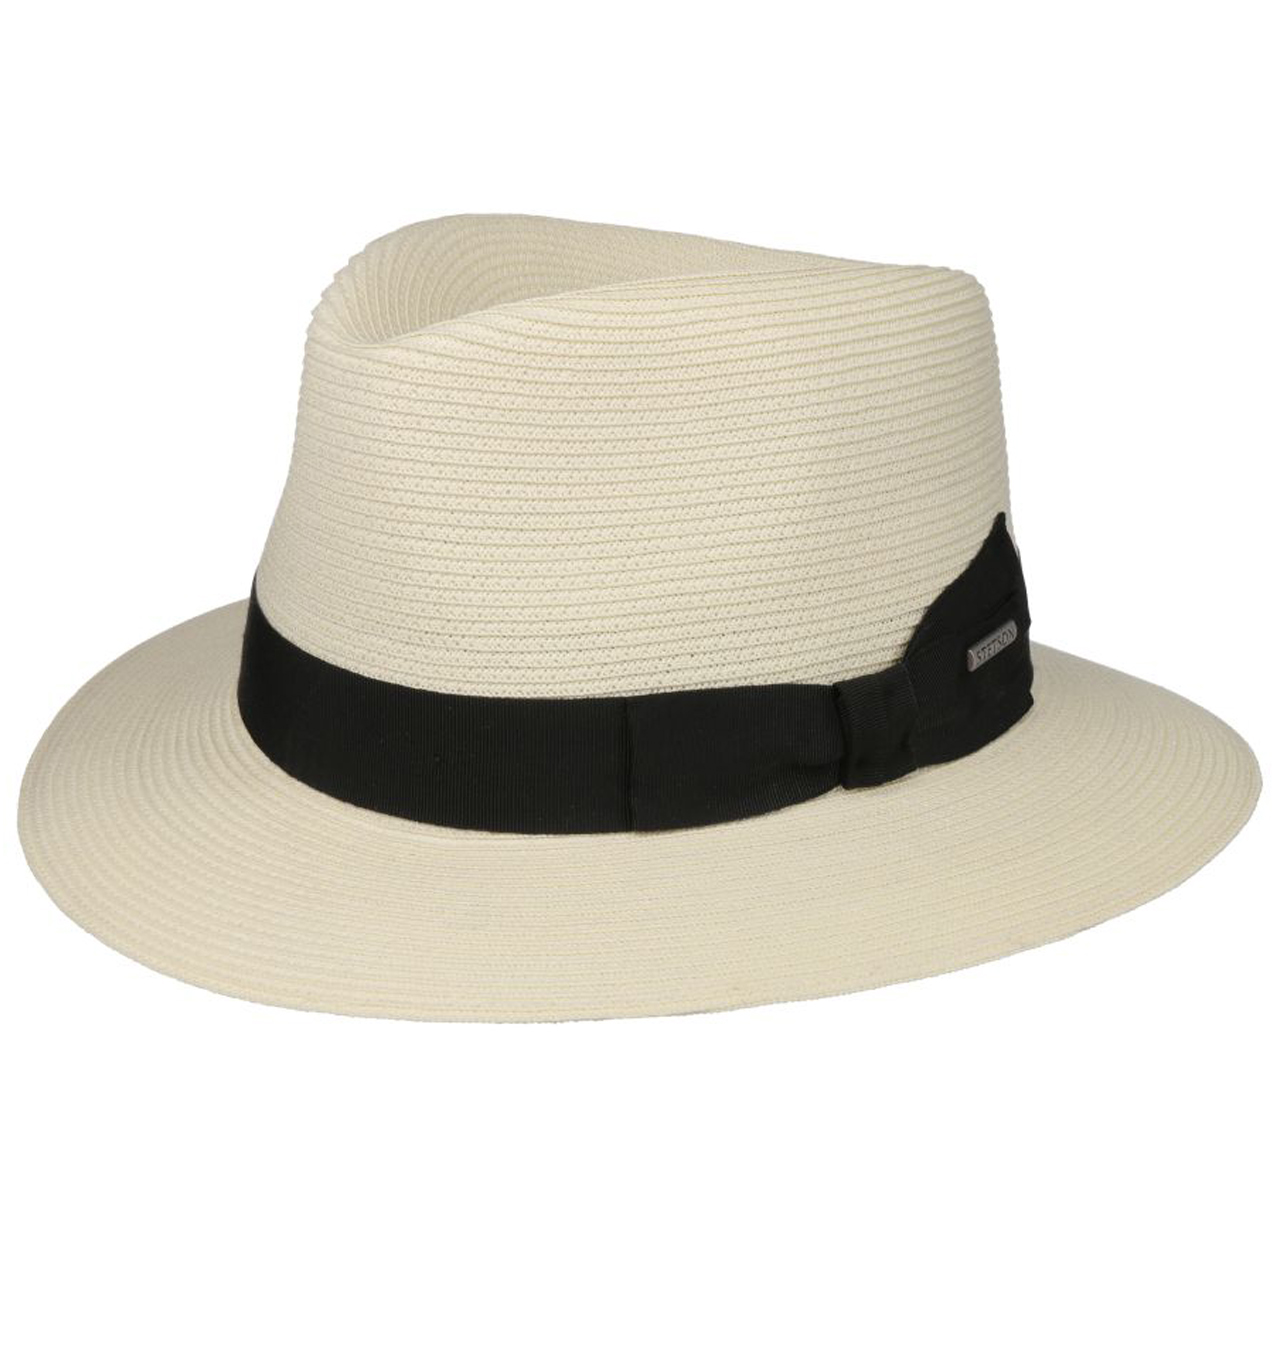 Stetson---Ventaco-Traveller-Straw-Hat---Cream-White1